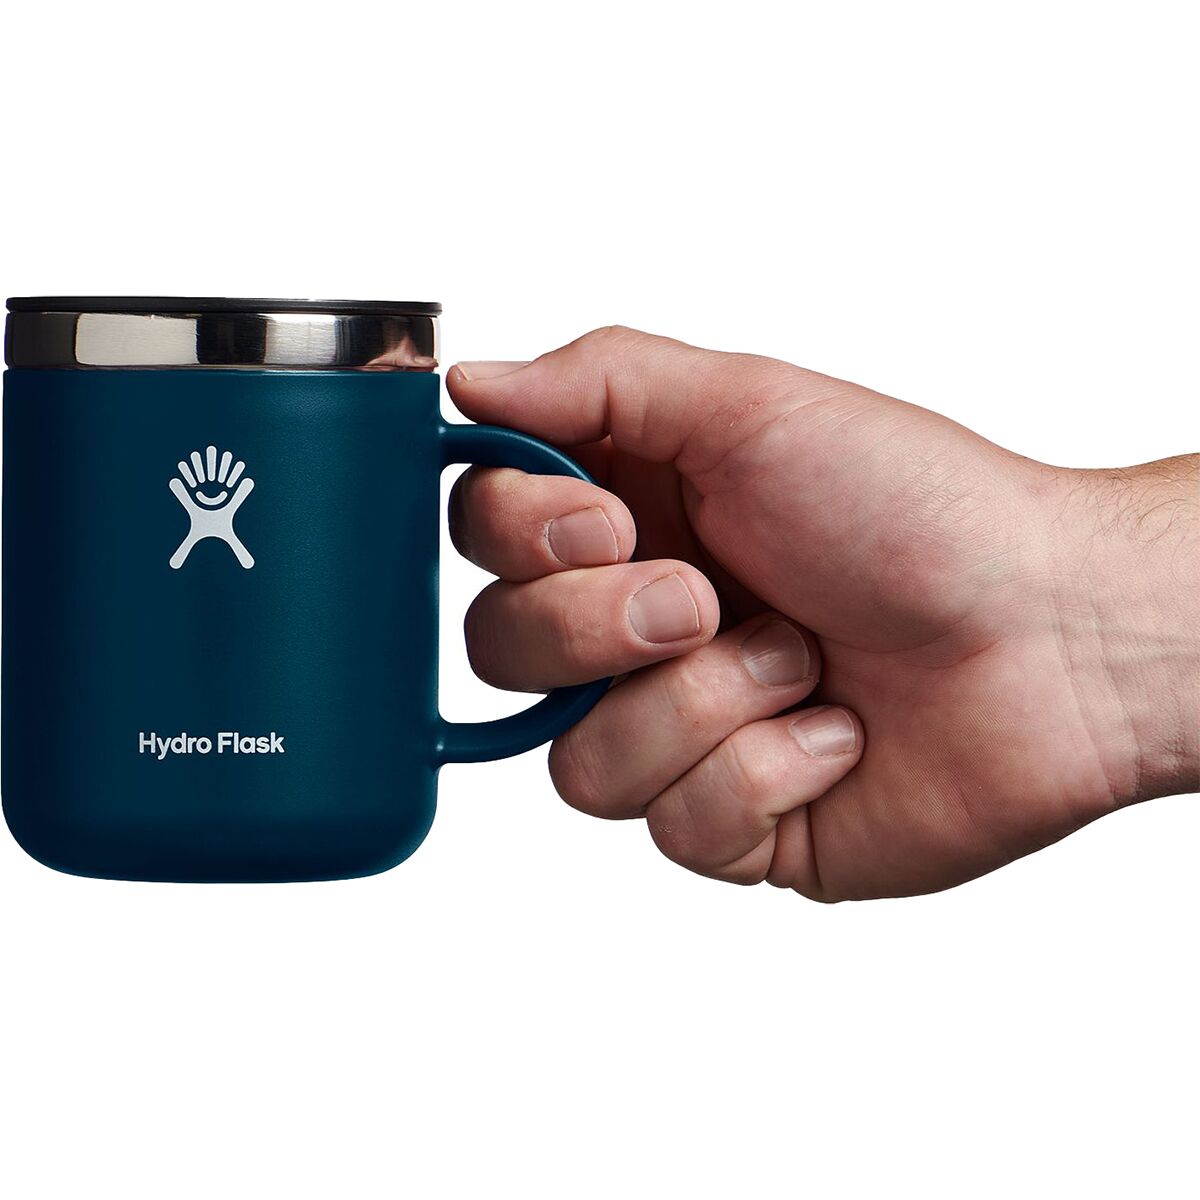 Hydro Flask 12 oz Coffee Mug 